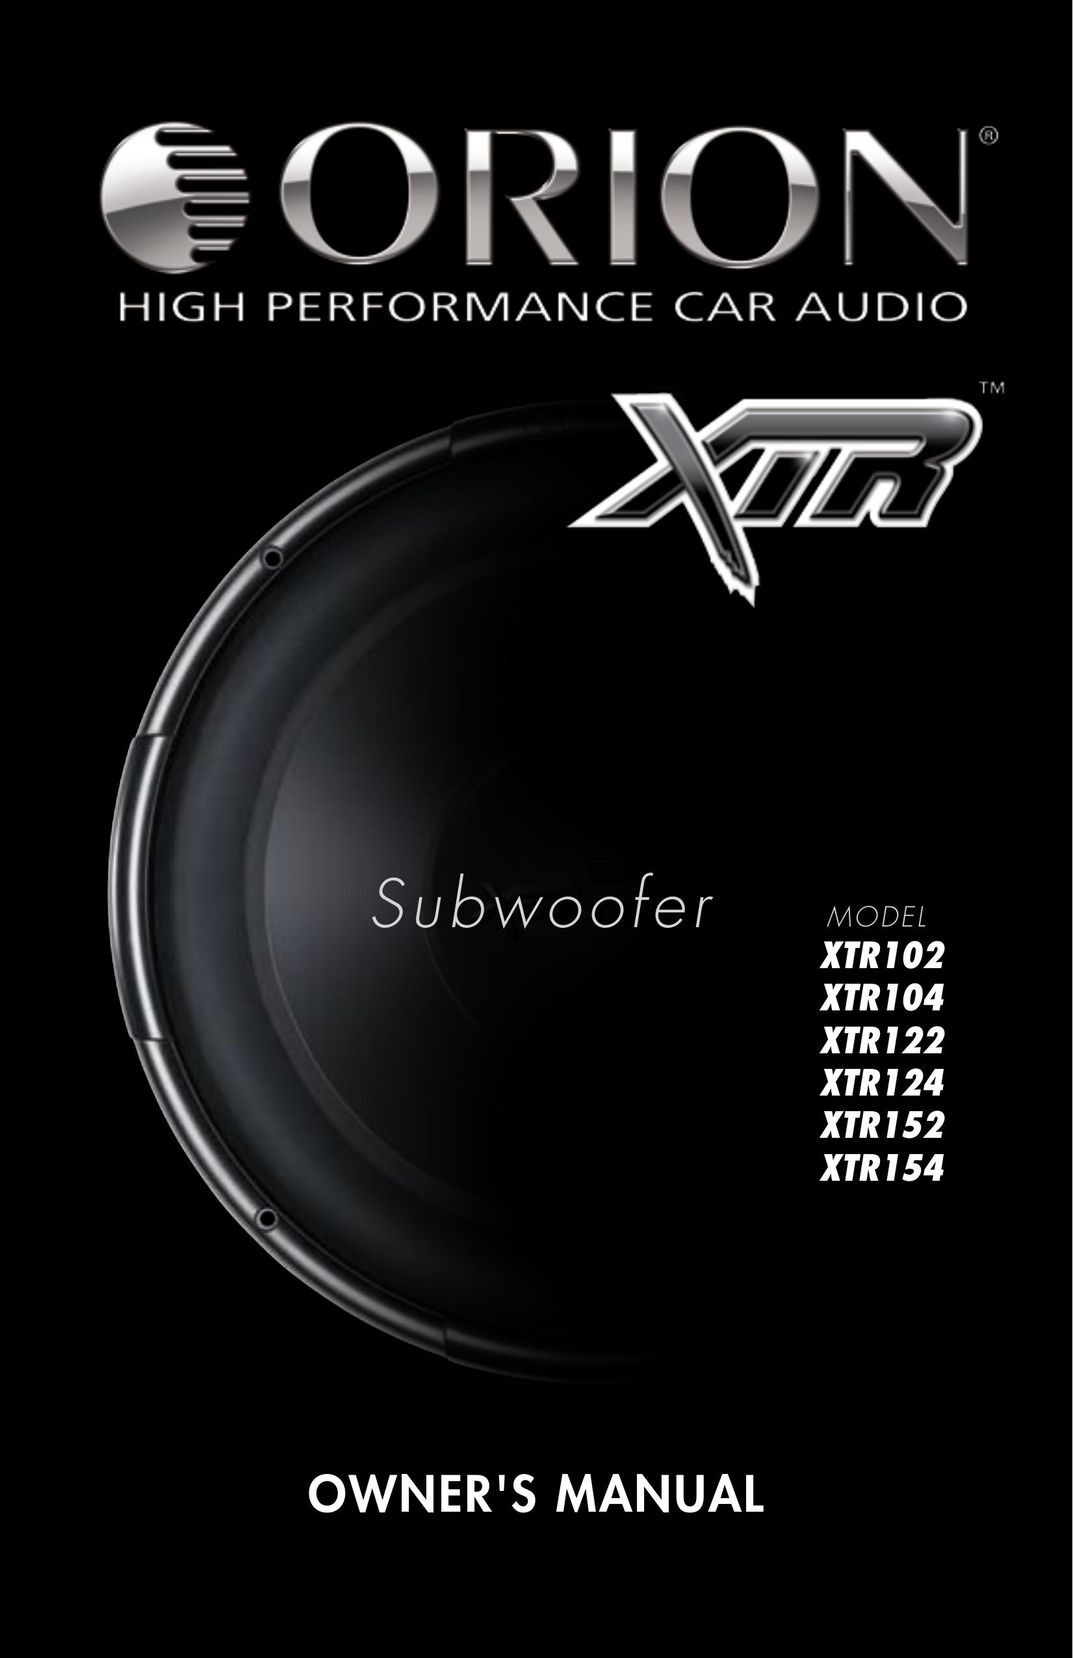 Orion Car Audio XTR124 Speaker User Manual